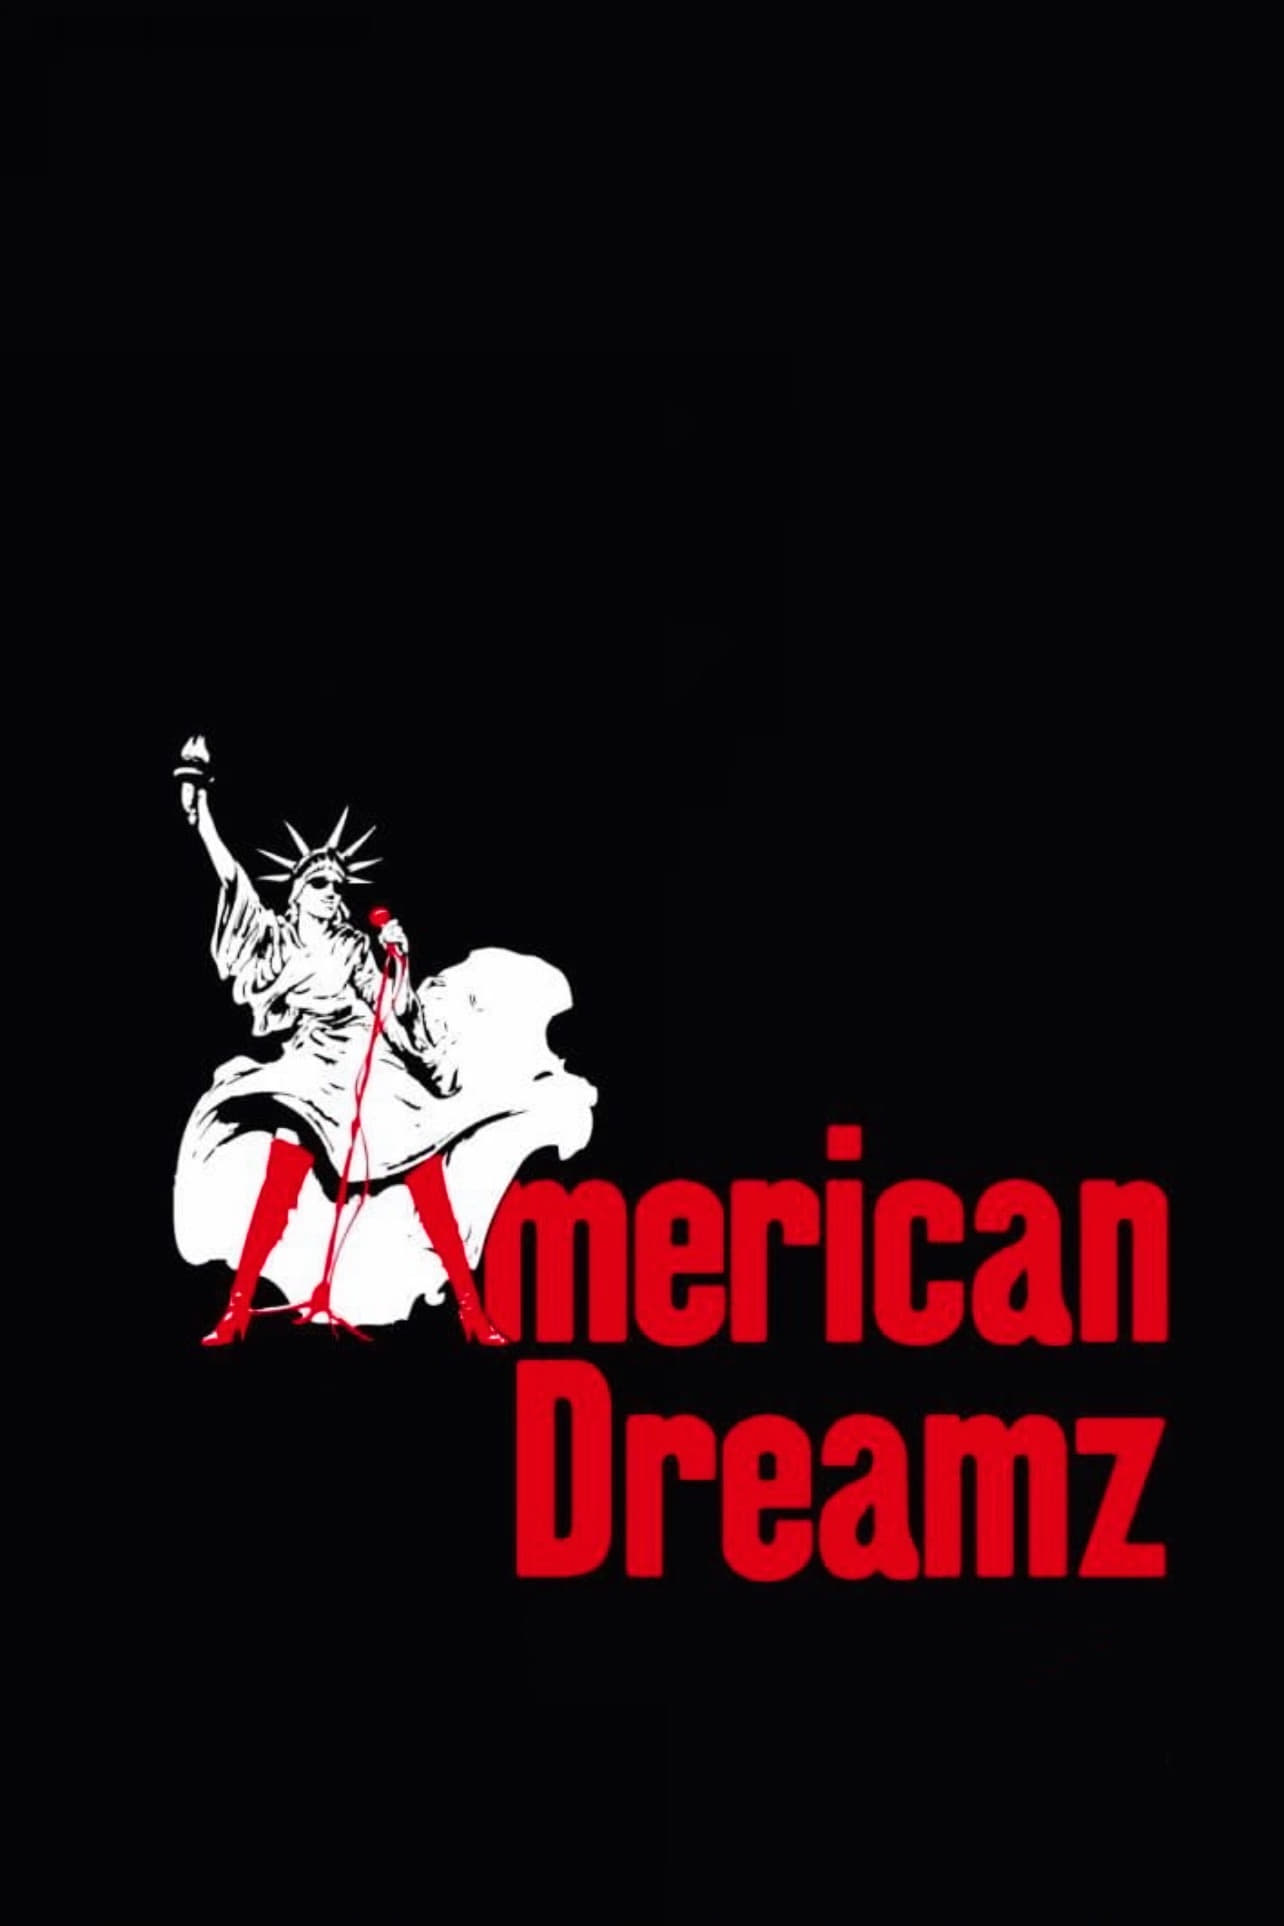 American Dreamz - Alles nur Show